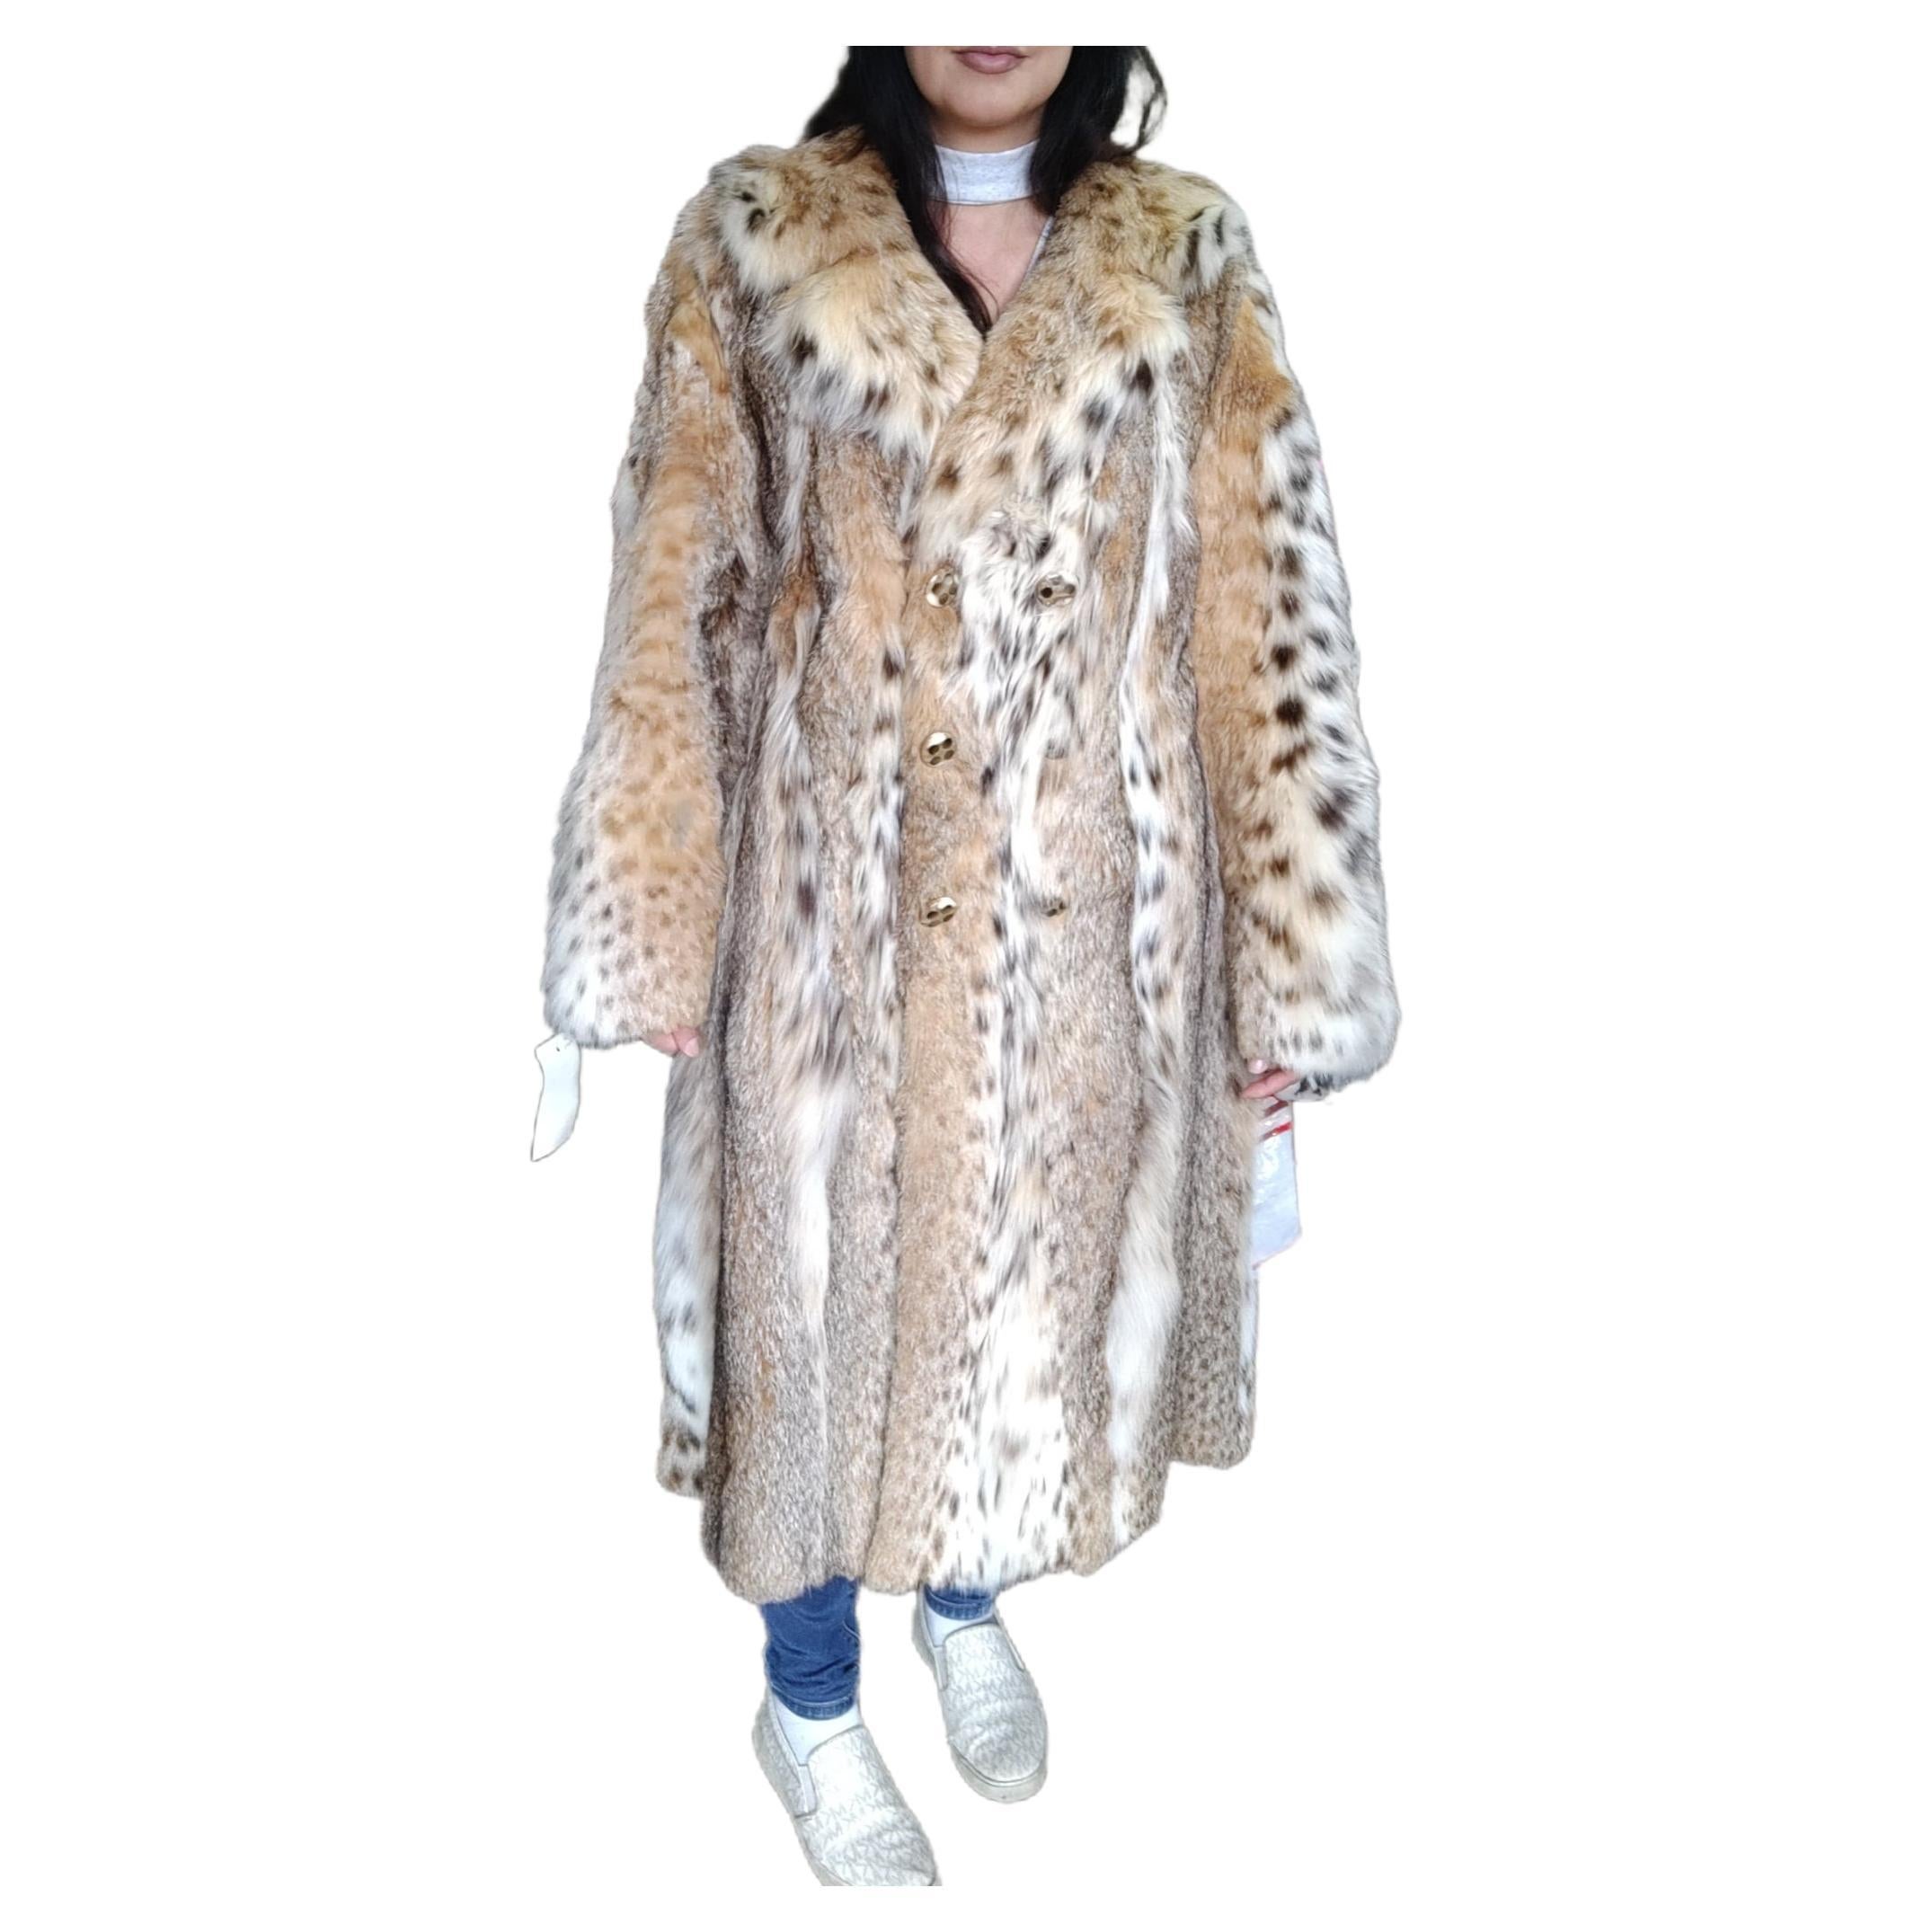 Brand new Vintage lynx fur coat size 4-6